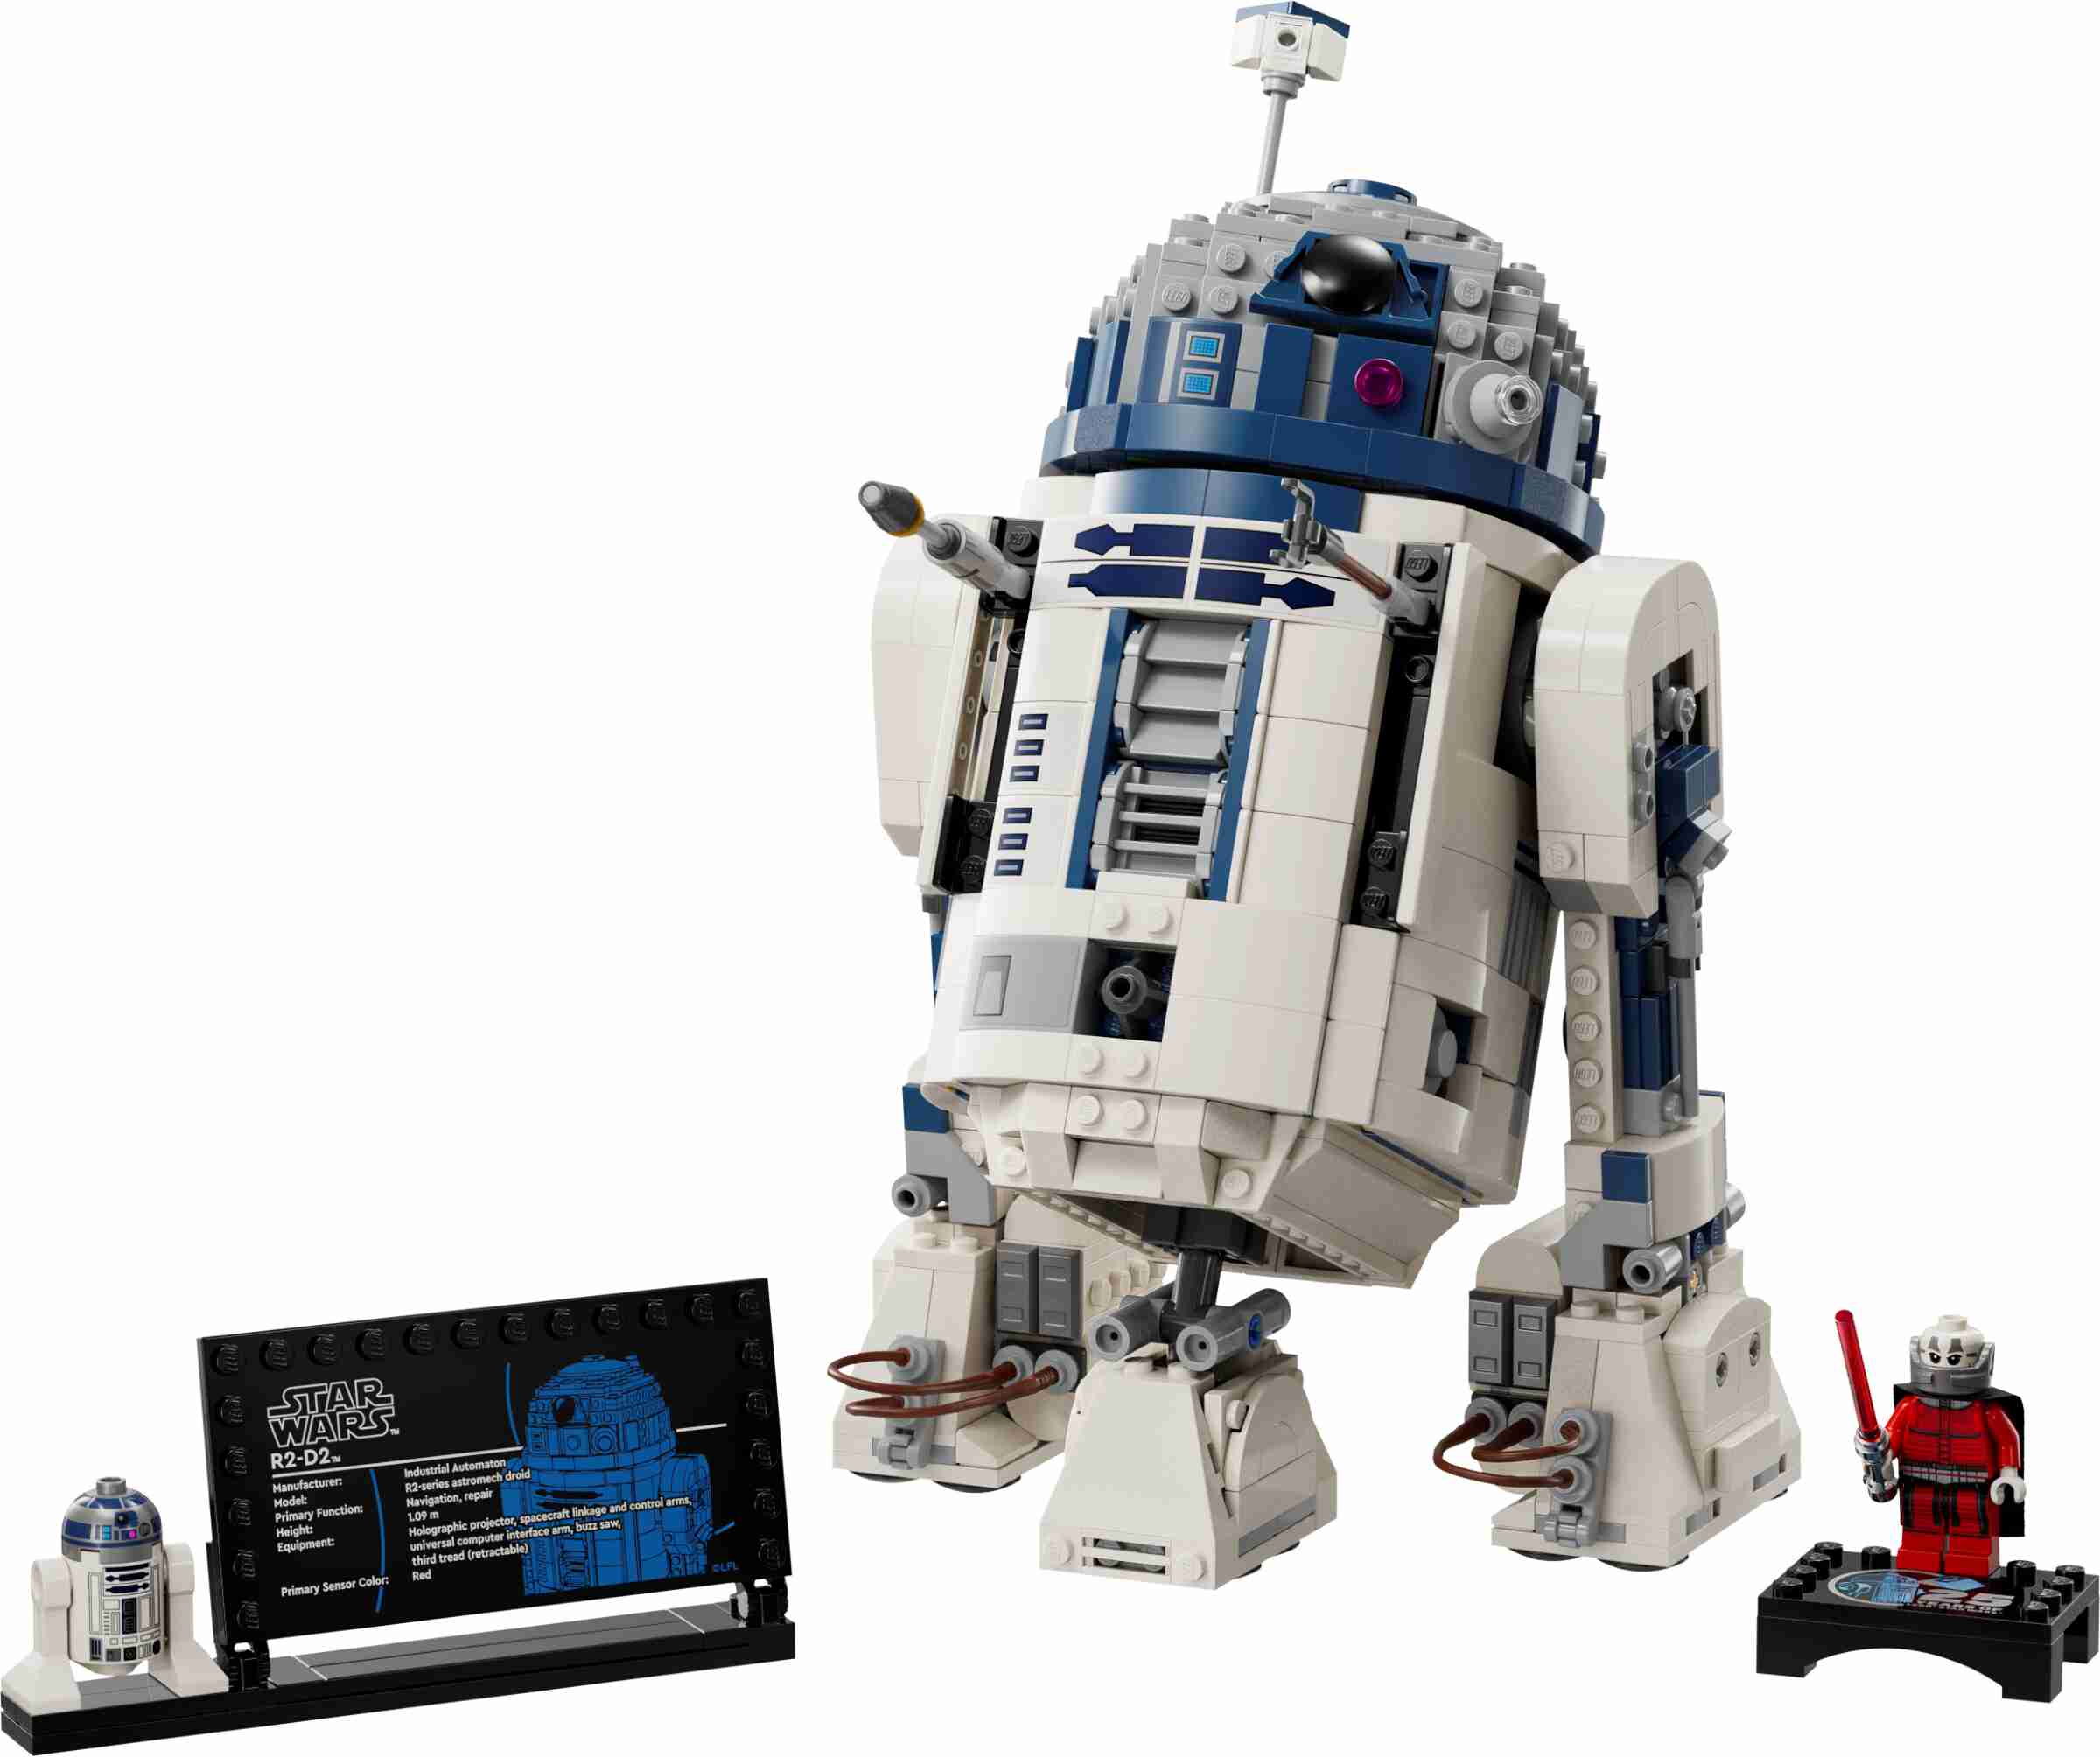 LEGO 75379 Star Wars R2-D2, Sehrohr, Werkzeug, drehbarer Kopf, Darth Malak